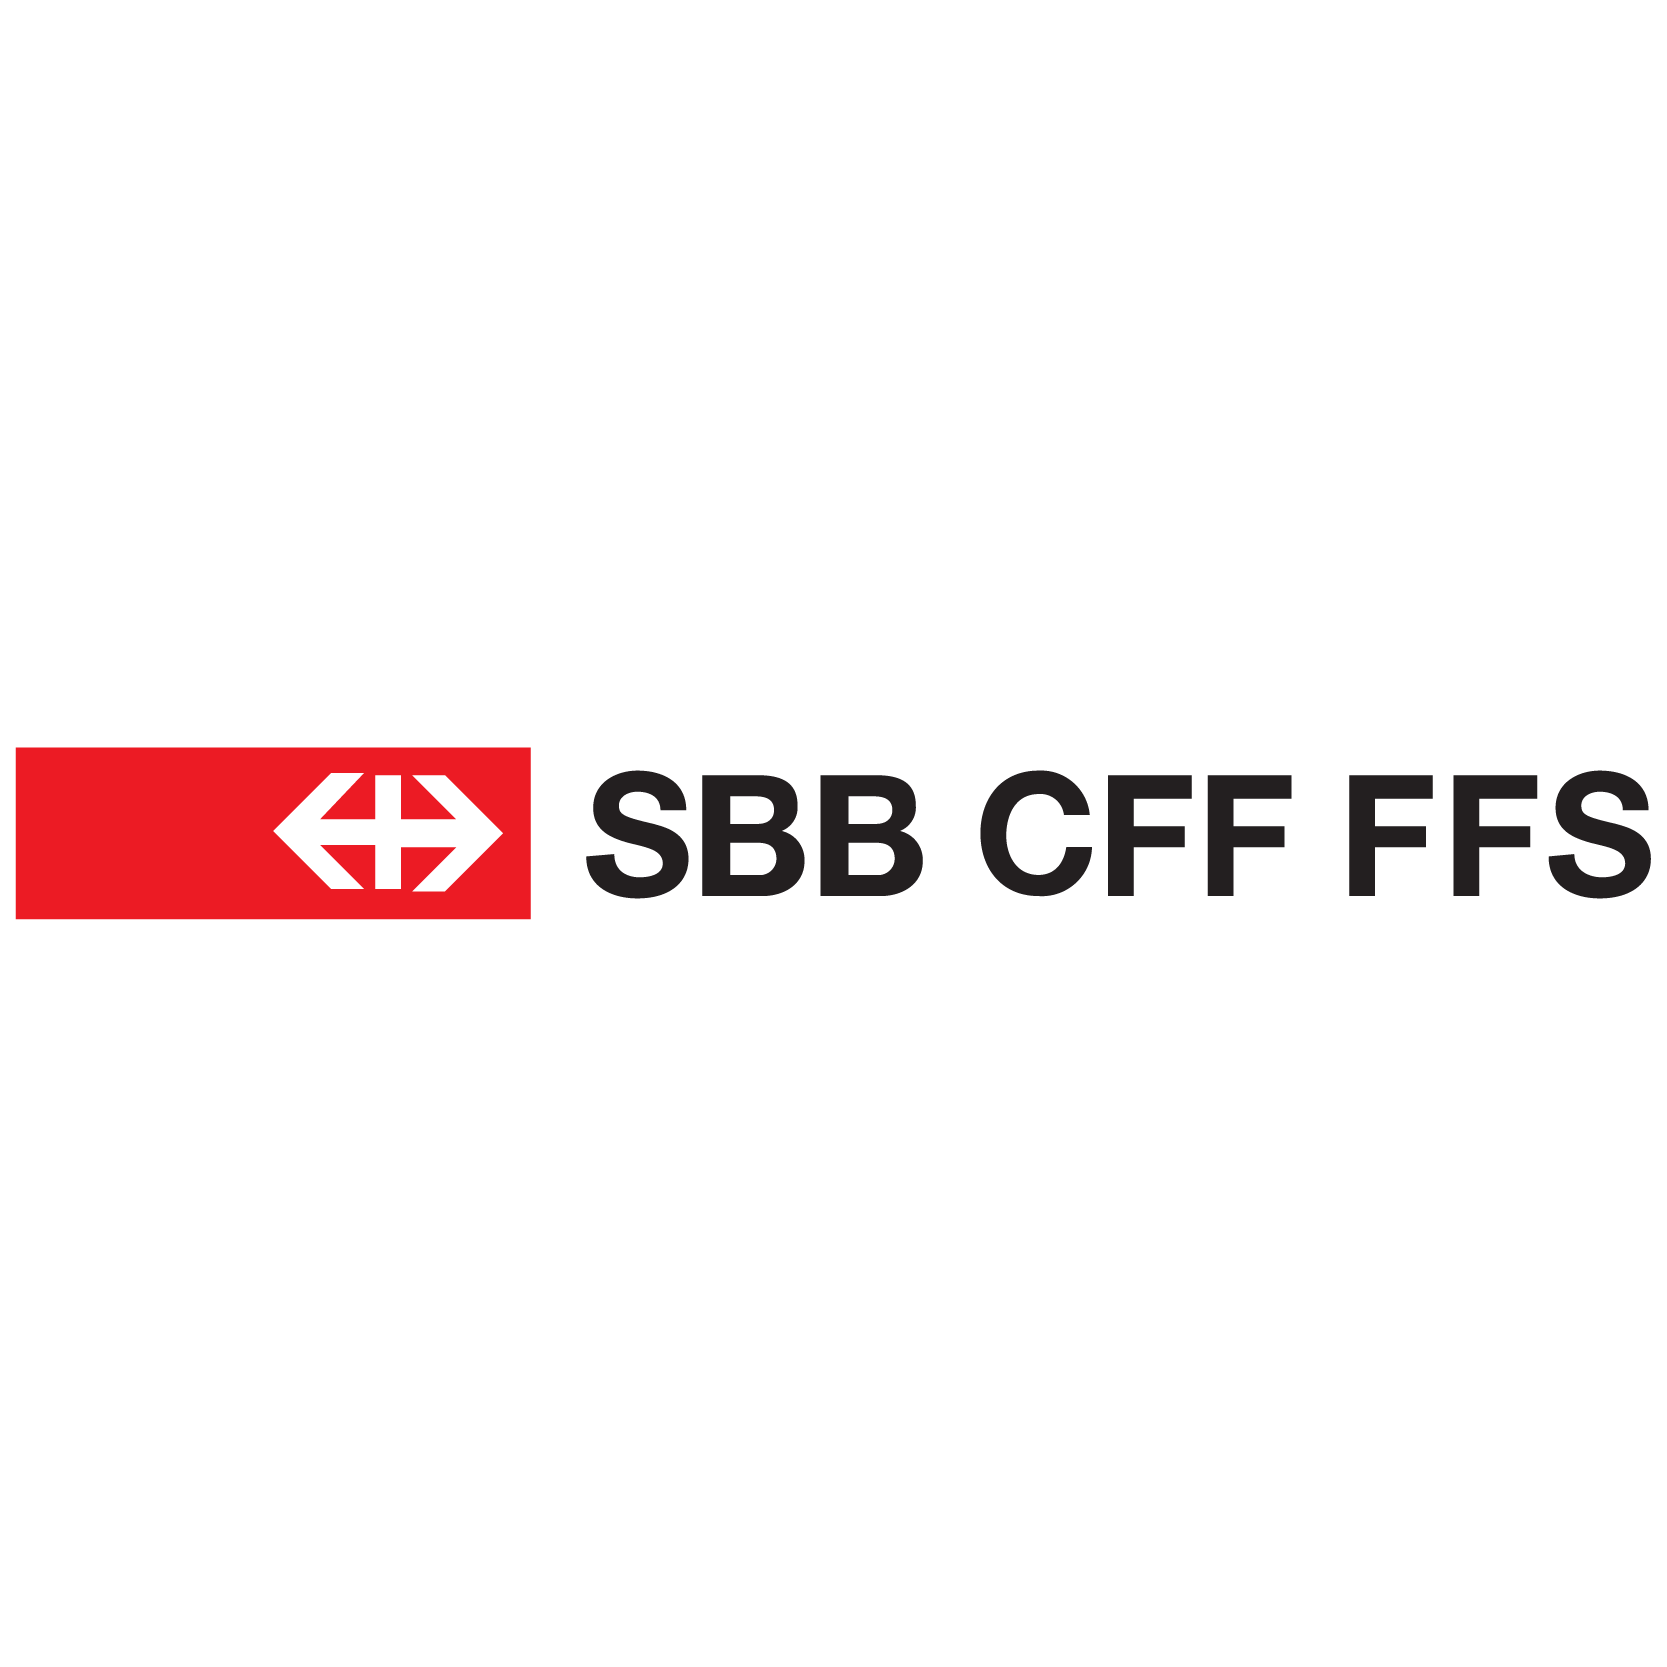 SBB logo